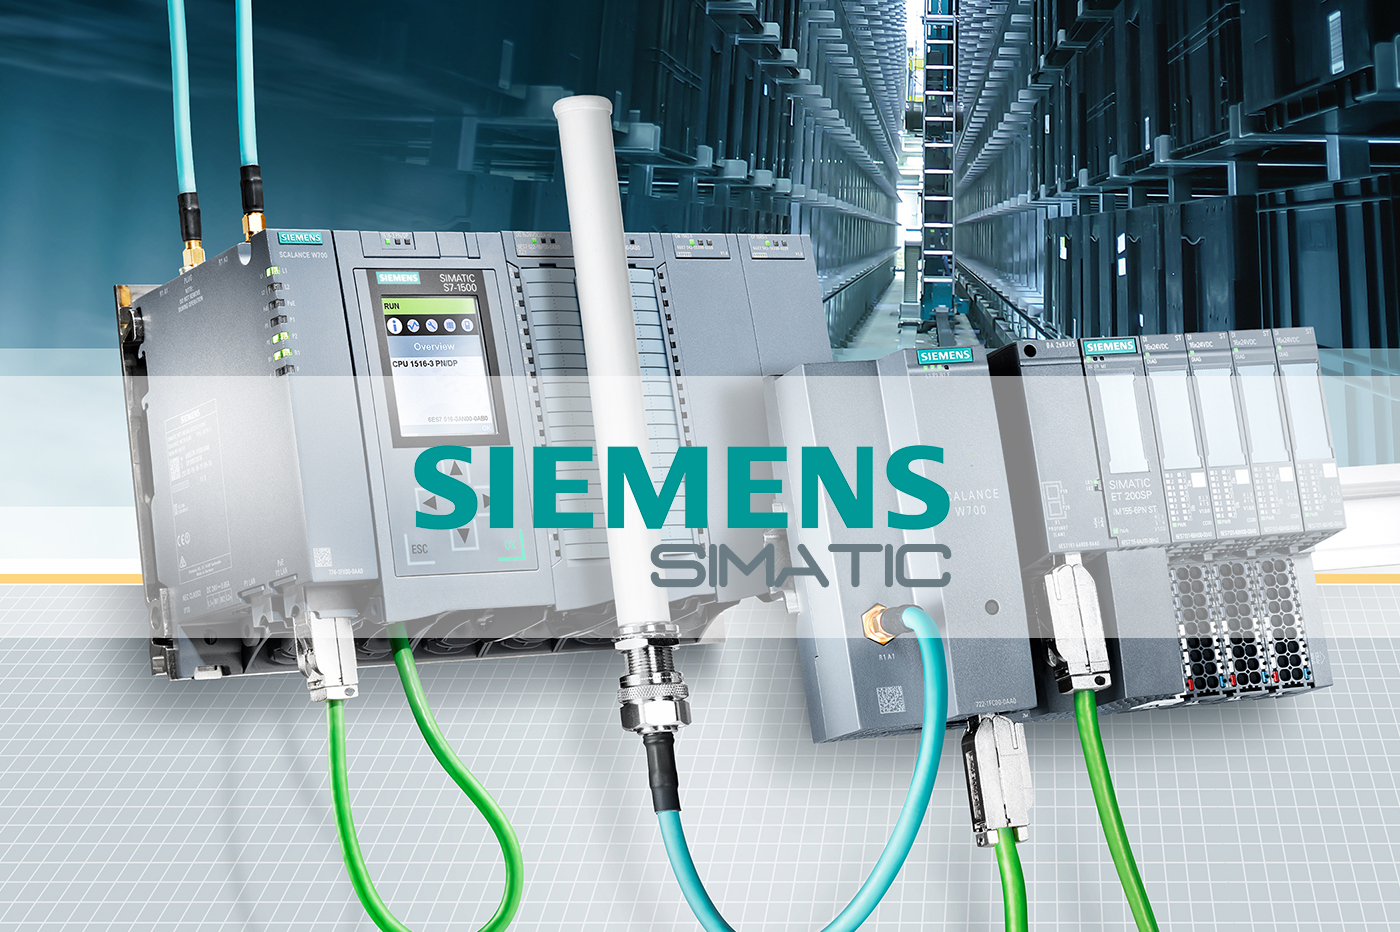 Siemens Simatic HMI